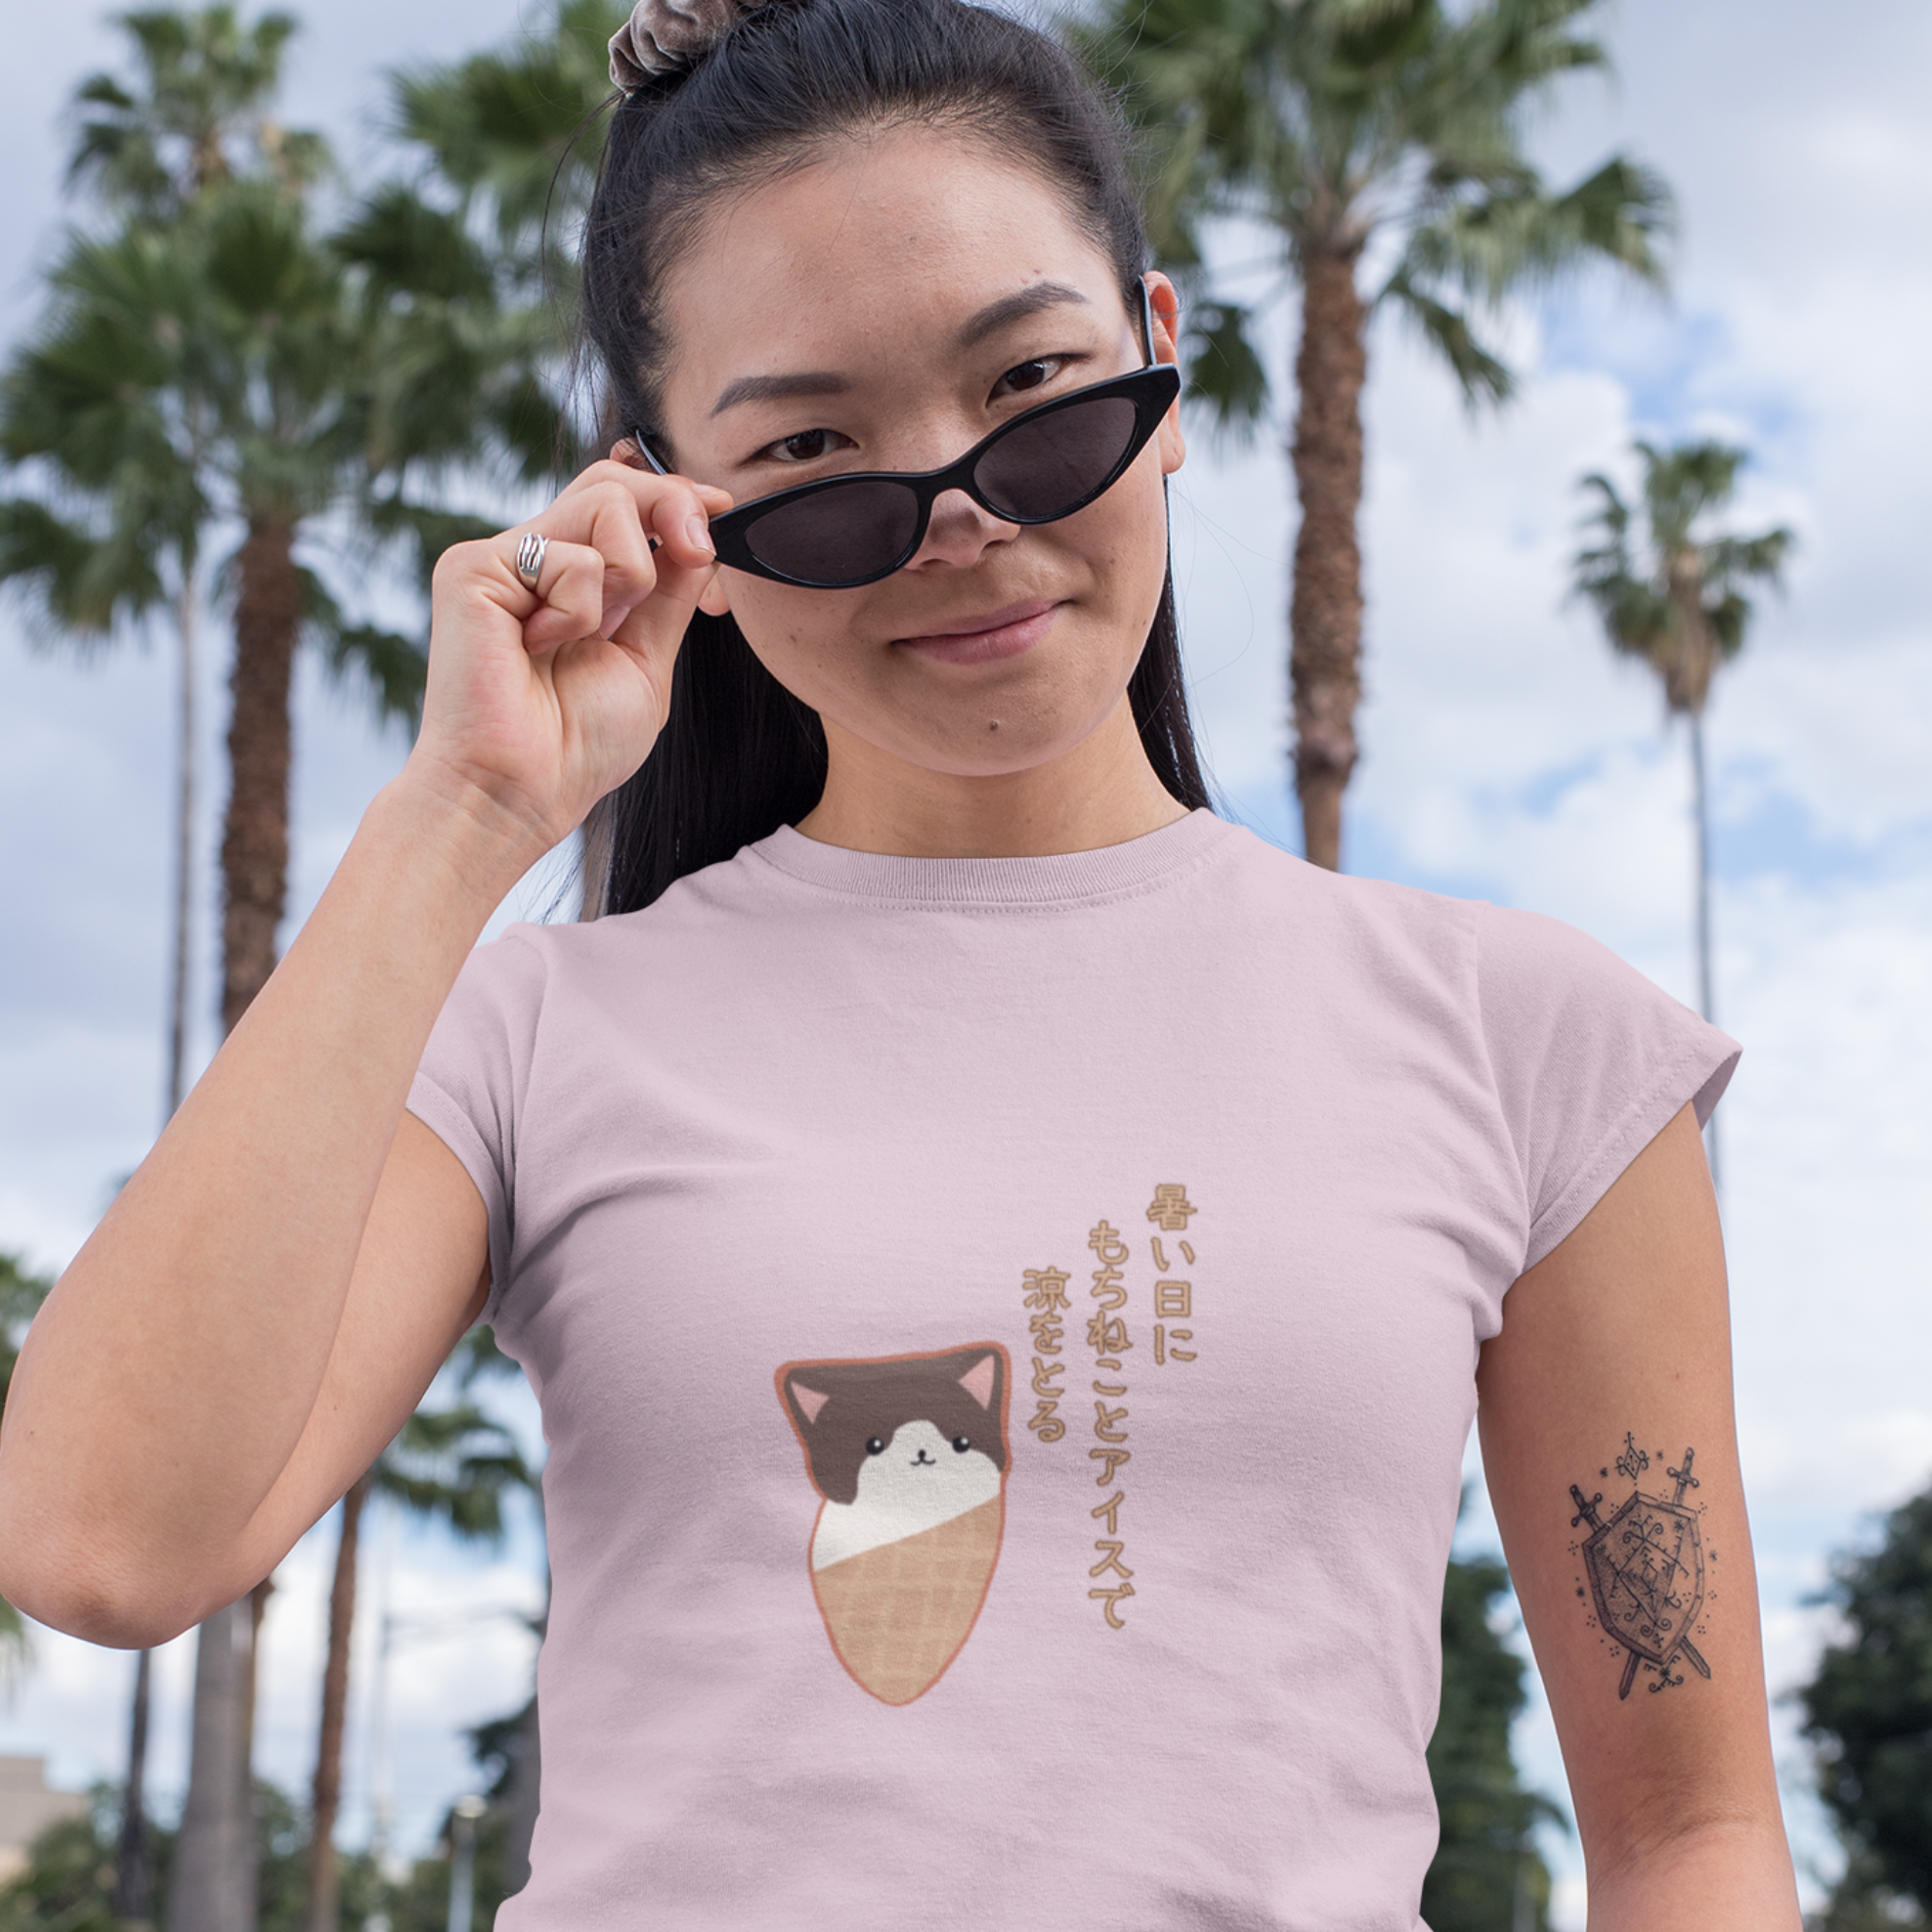 Japanese Haiku T-shirt: Chill with Mochi Cat and Ice Cream on Hot Summer Days - Japanese Foodie Shirt with Mochineko Art